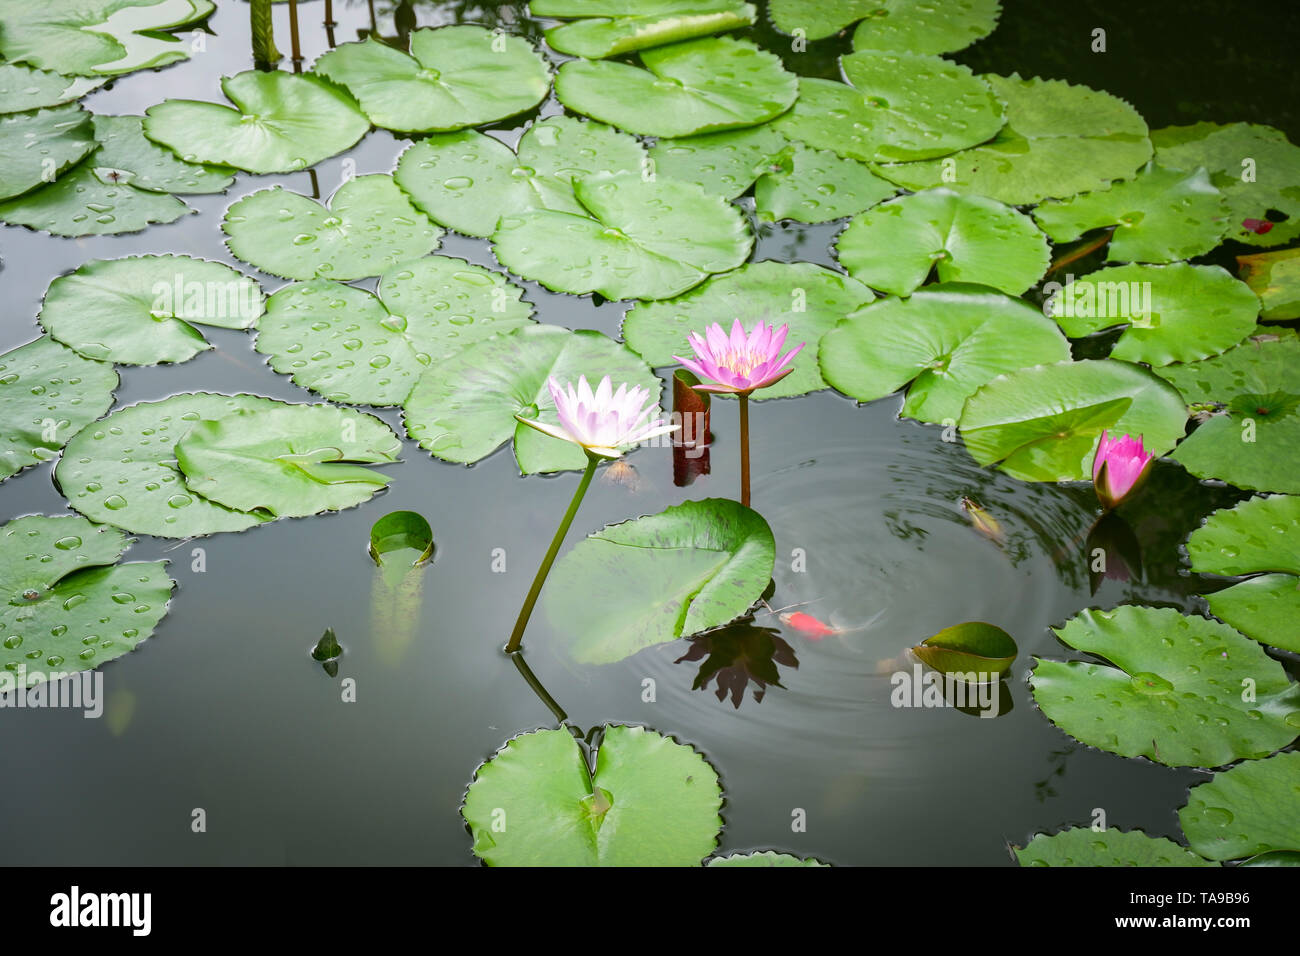 Lotus pond / Water lily or lotus flower and green leaf growing ...